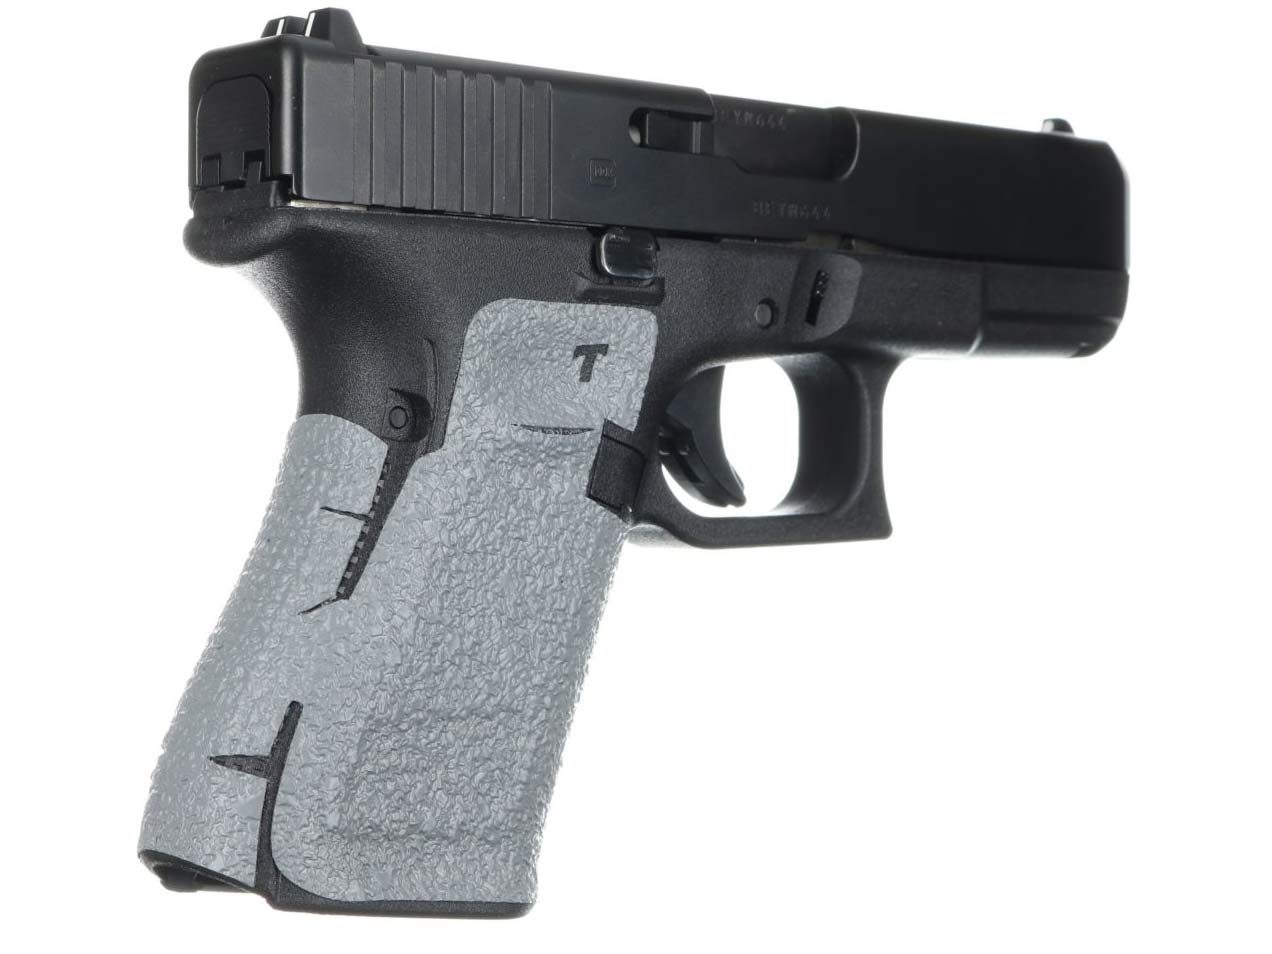 A talon grip wrapped around the handle of a handgun.